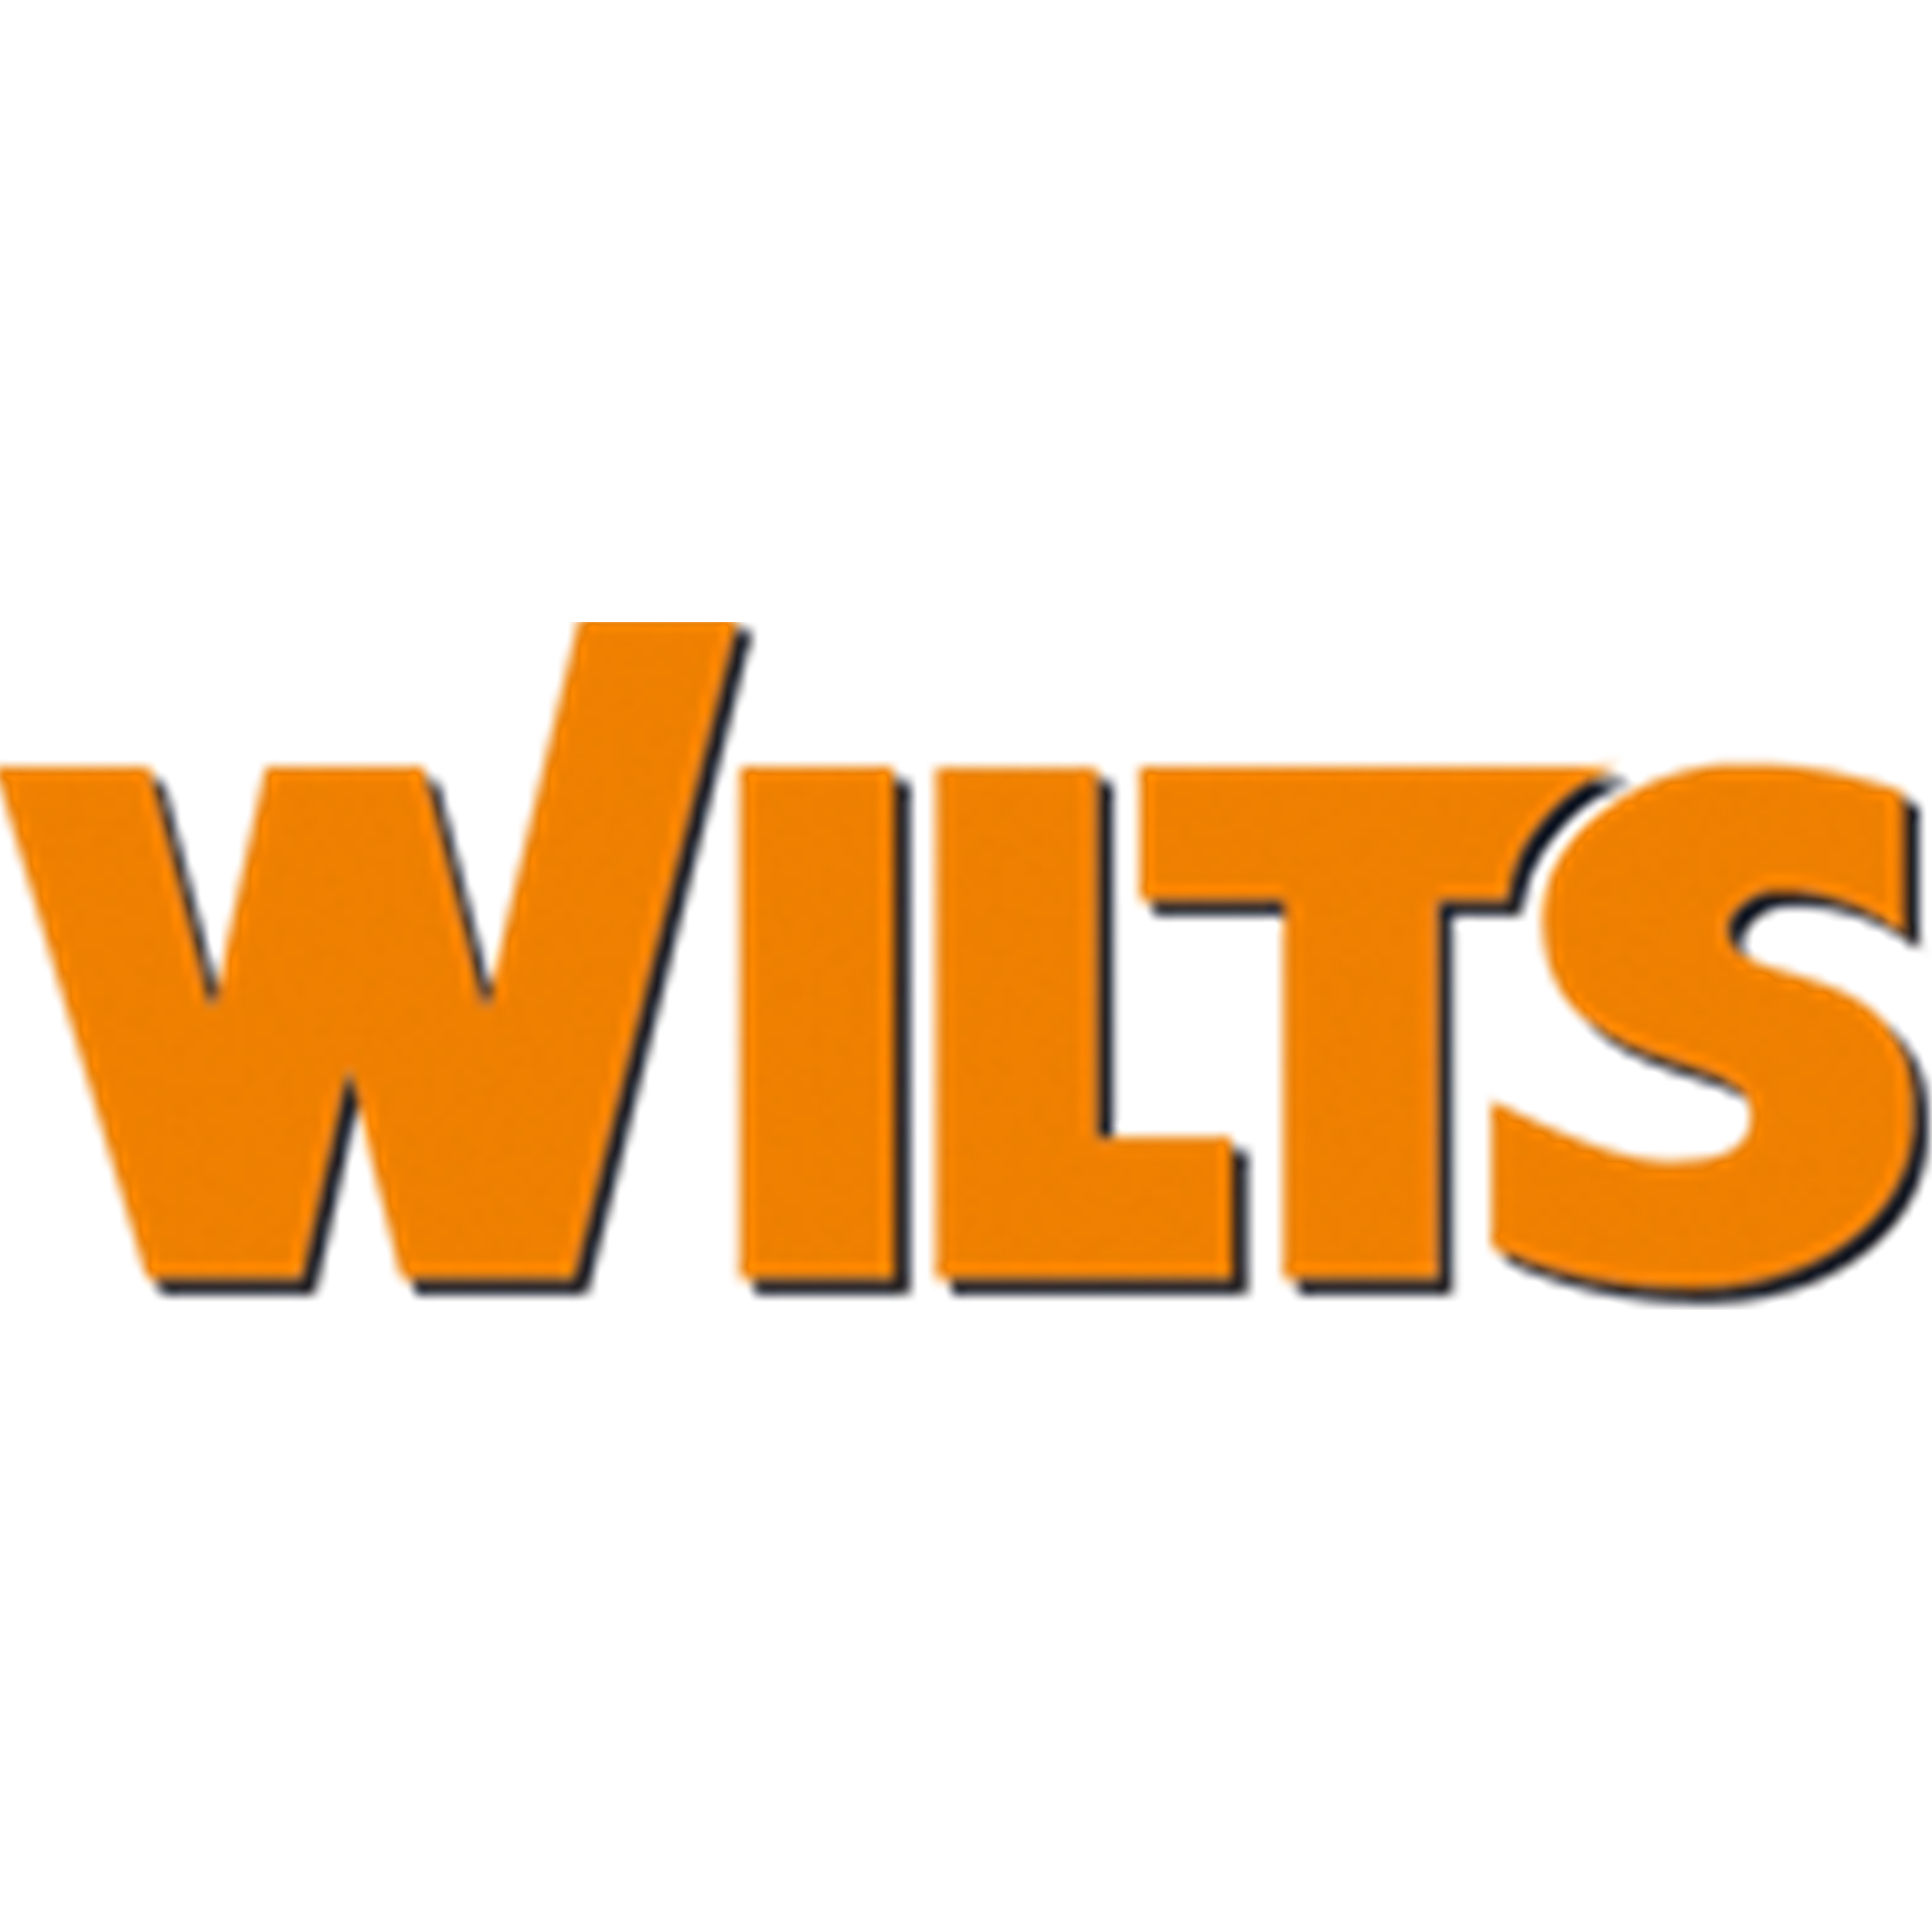 wilts-logo.png